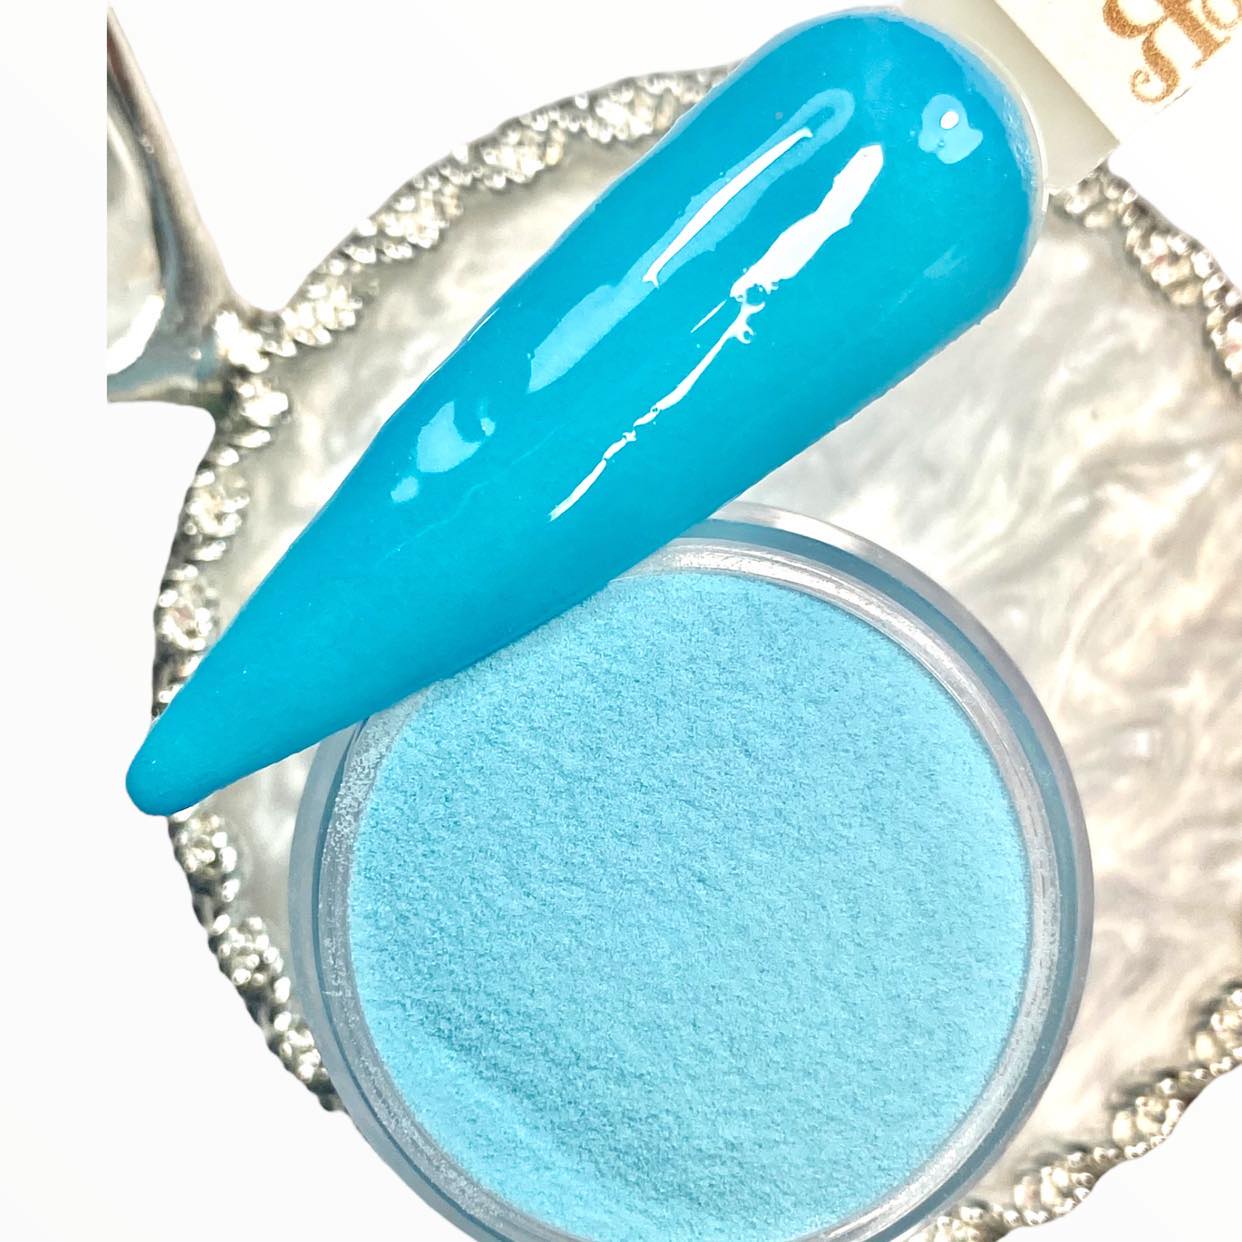 Solid blue dip powder